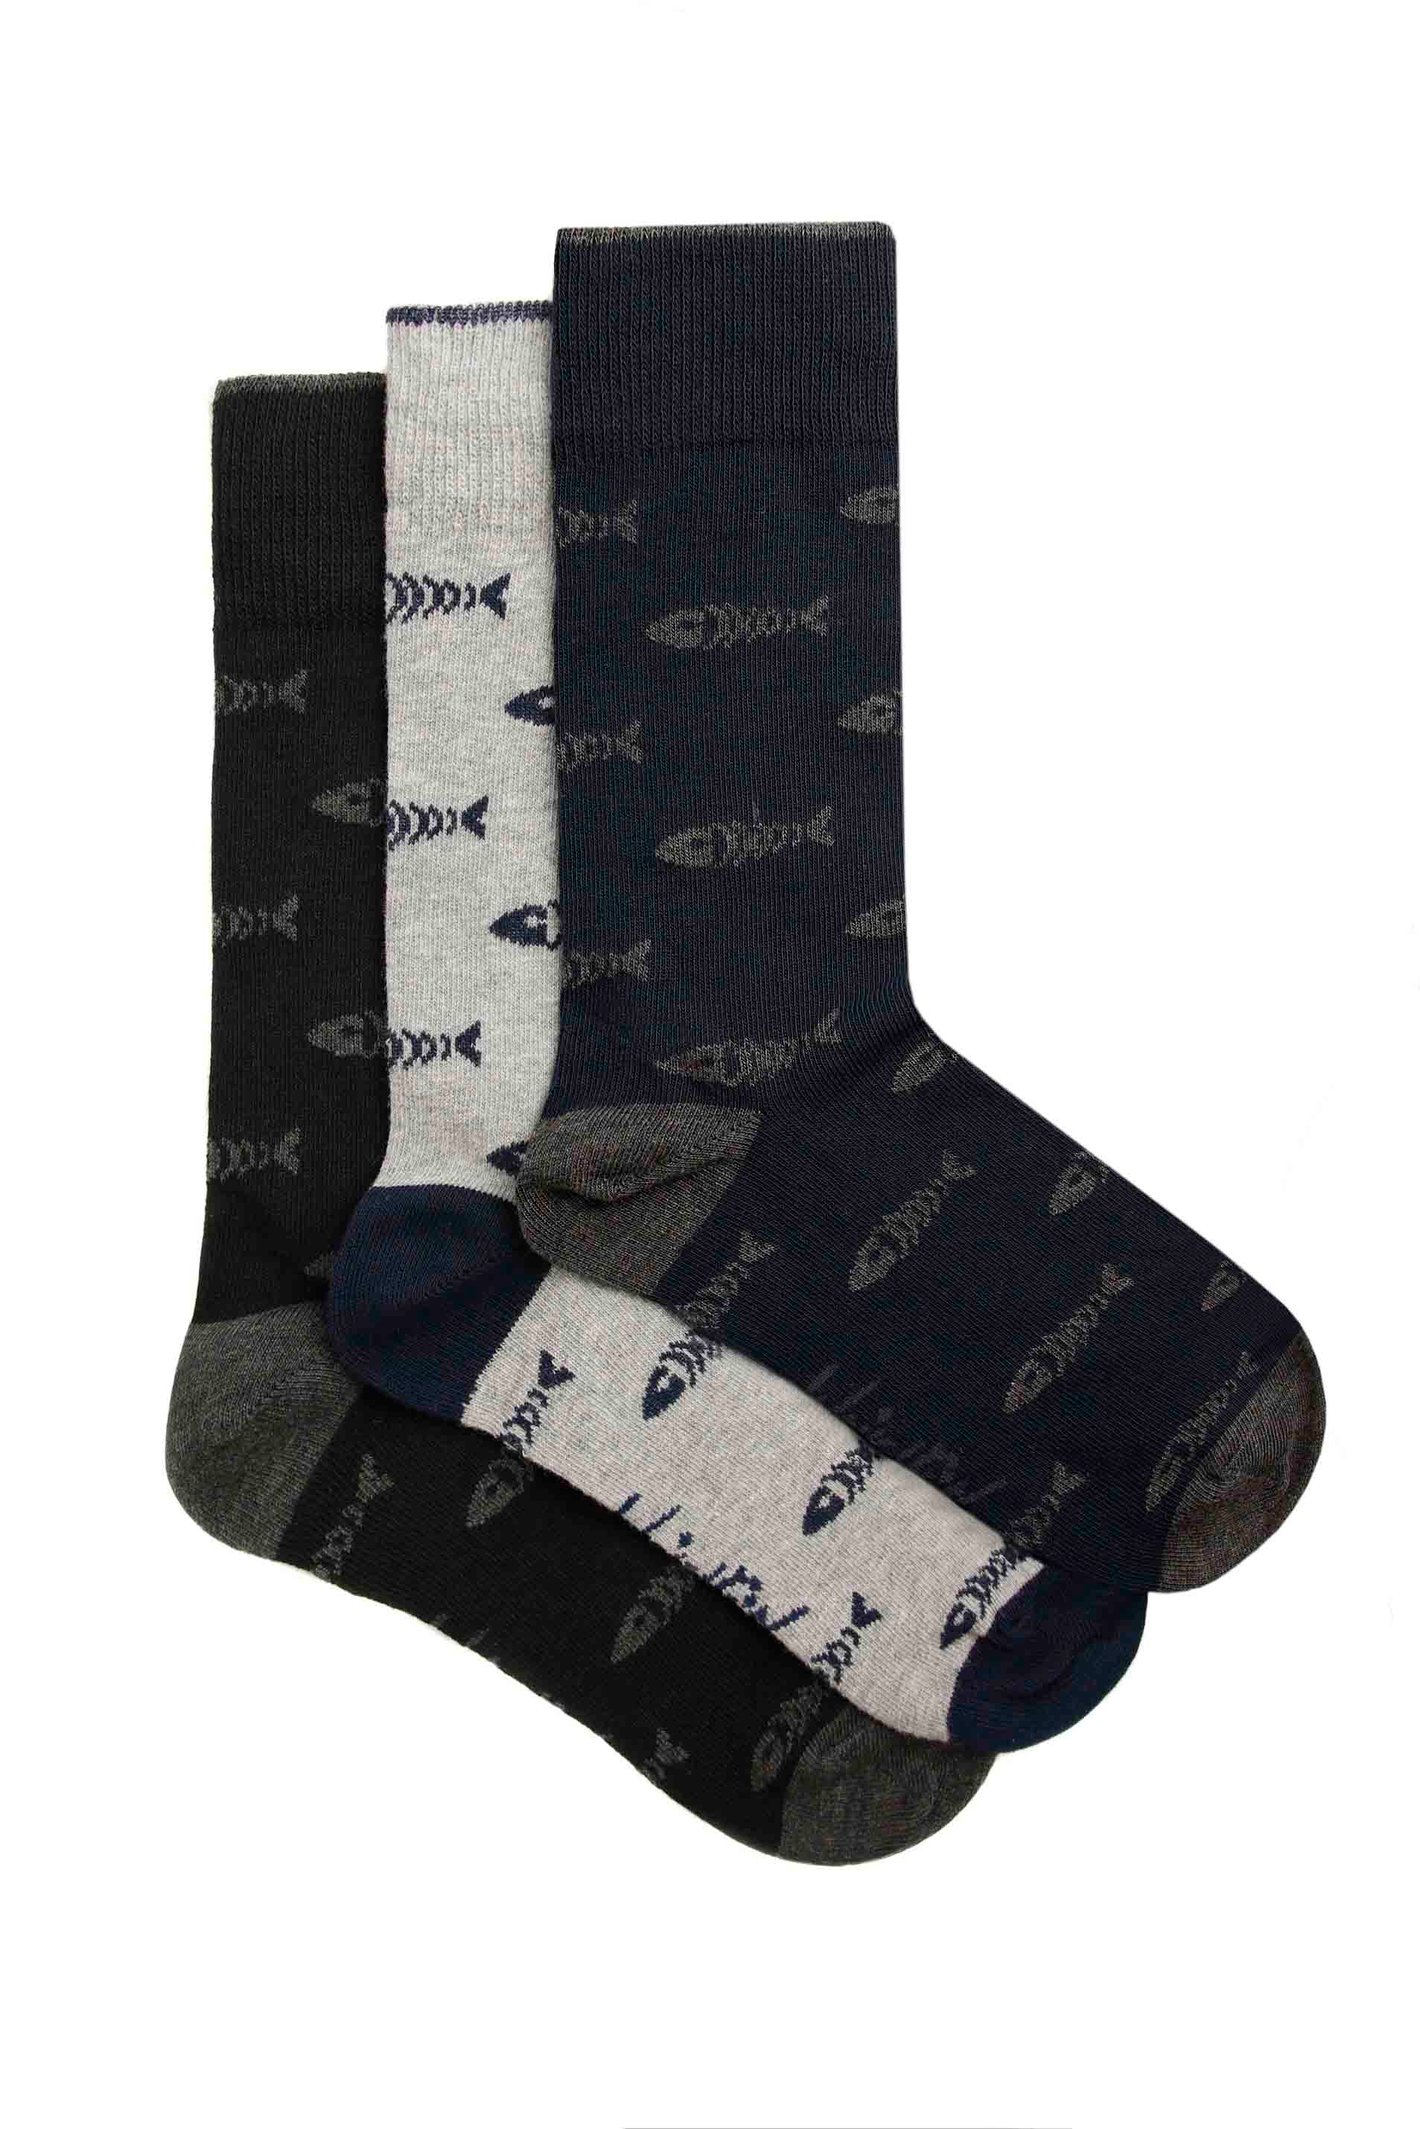 Weird Fish Ronan Branded Bones Sock 3 Pack Grey Size 7-11